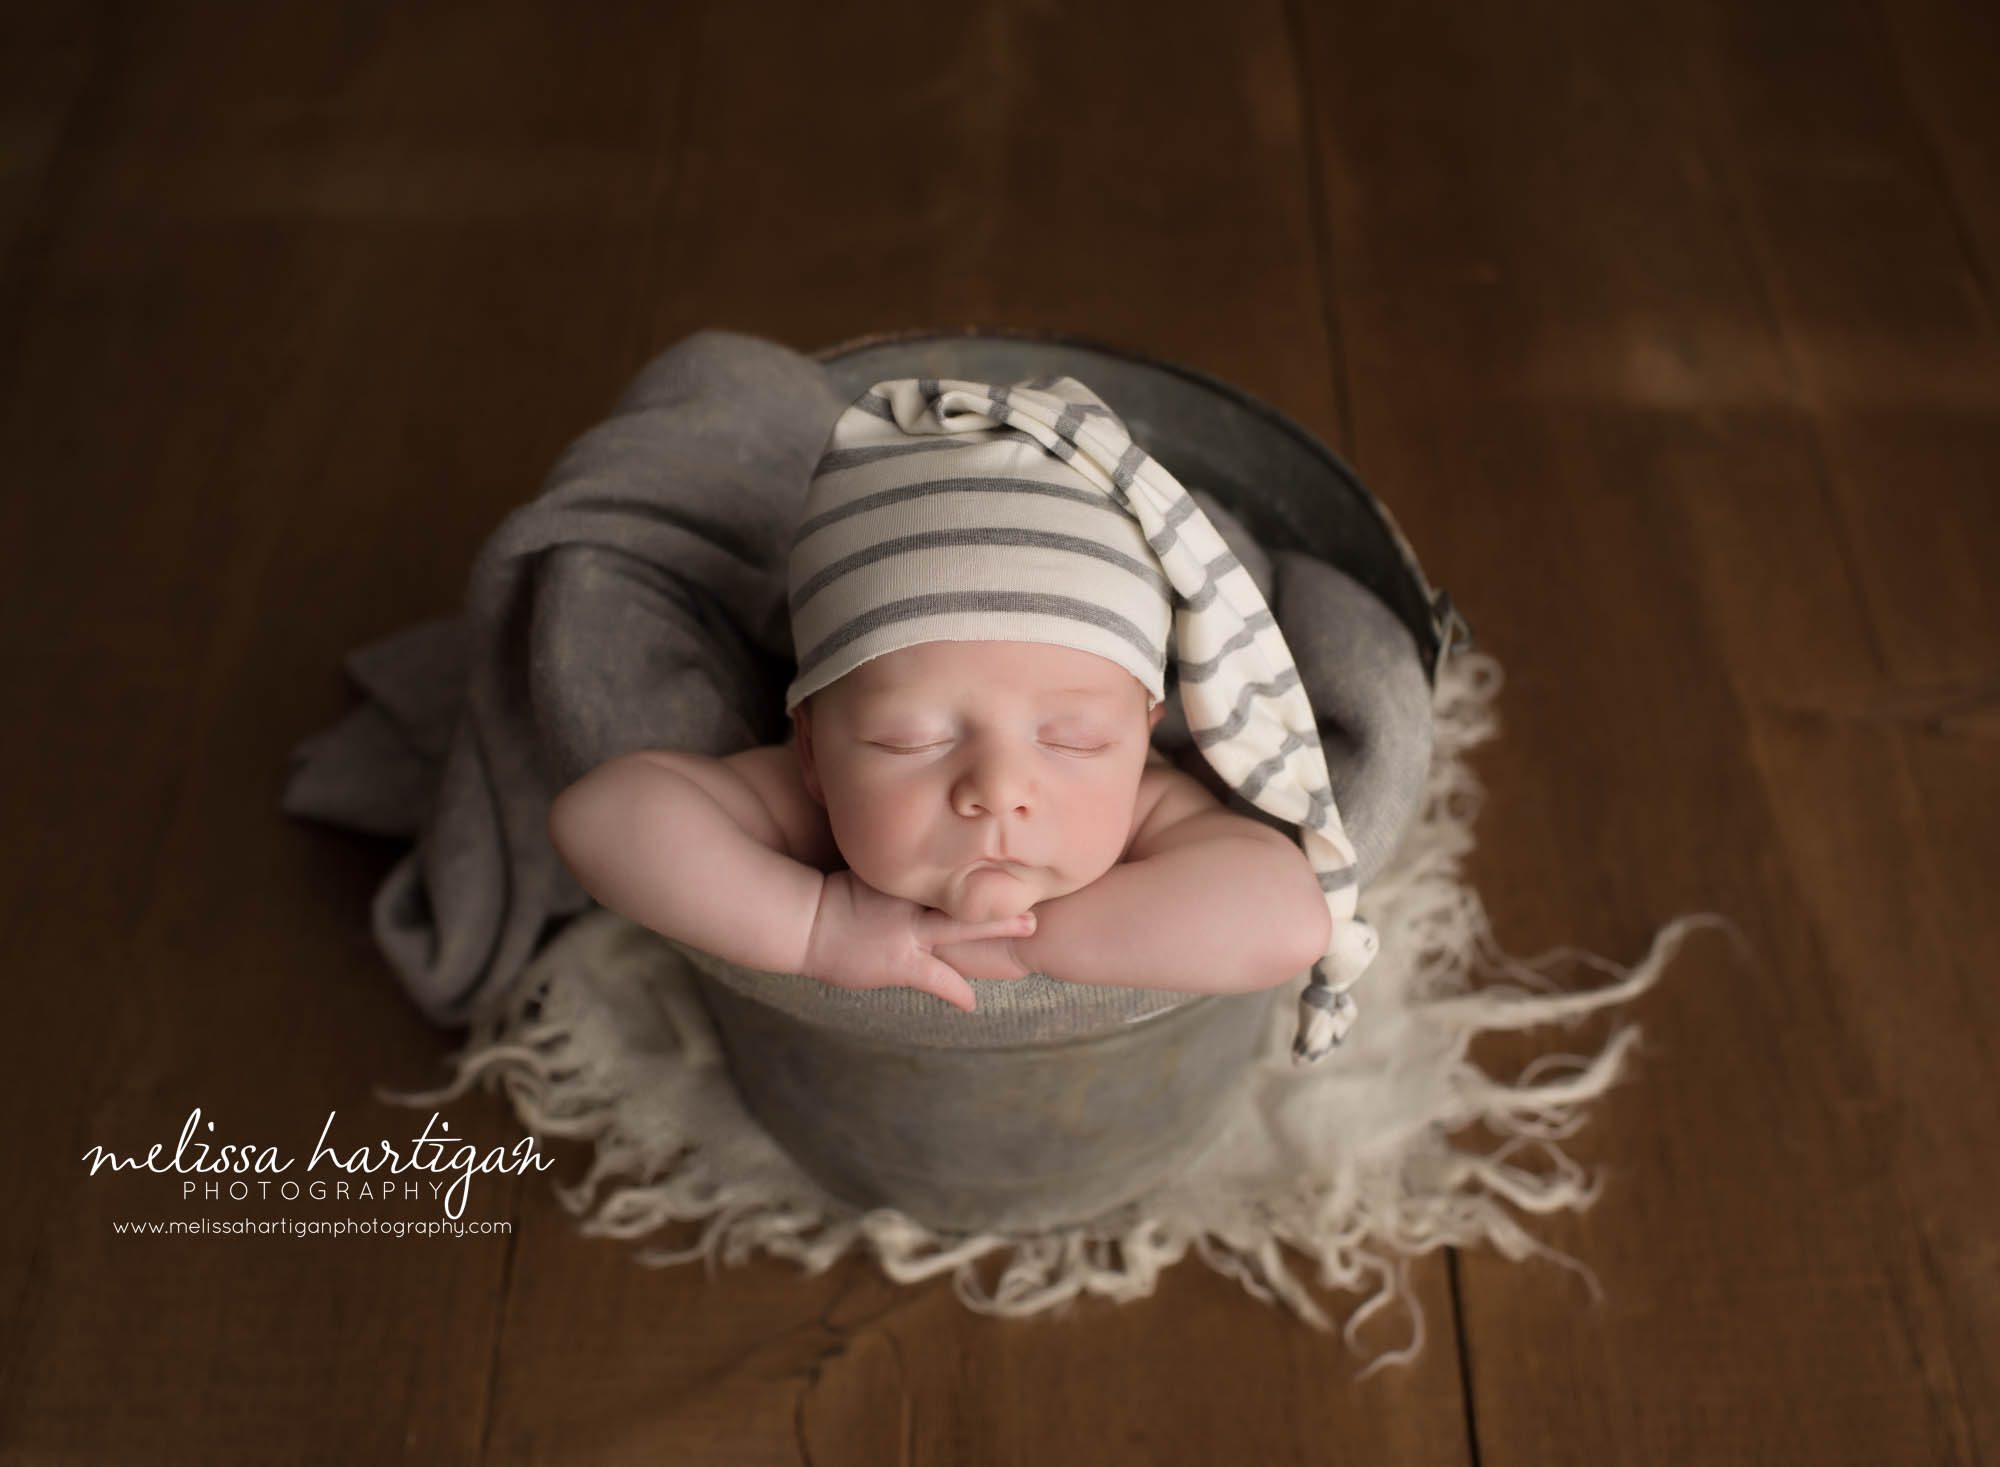 newborn baby boy posed in bucket wearing striped sleepy cap with gray layer wrap